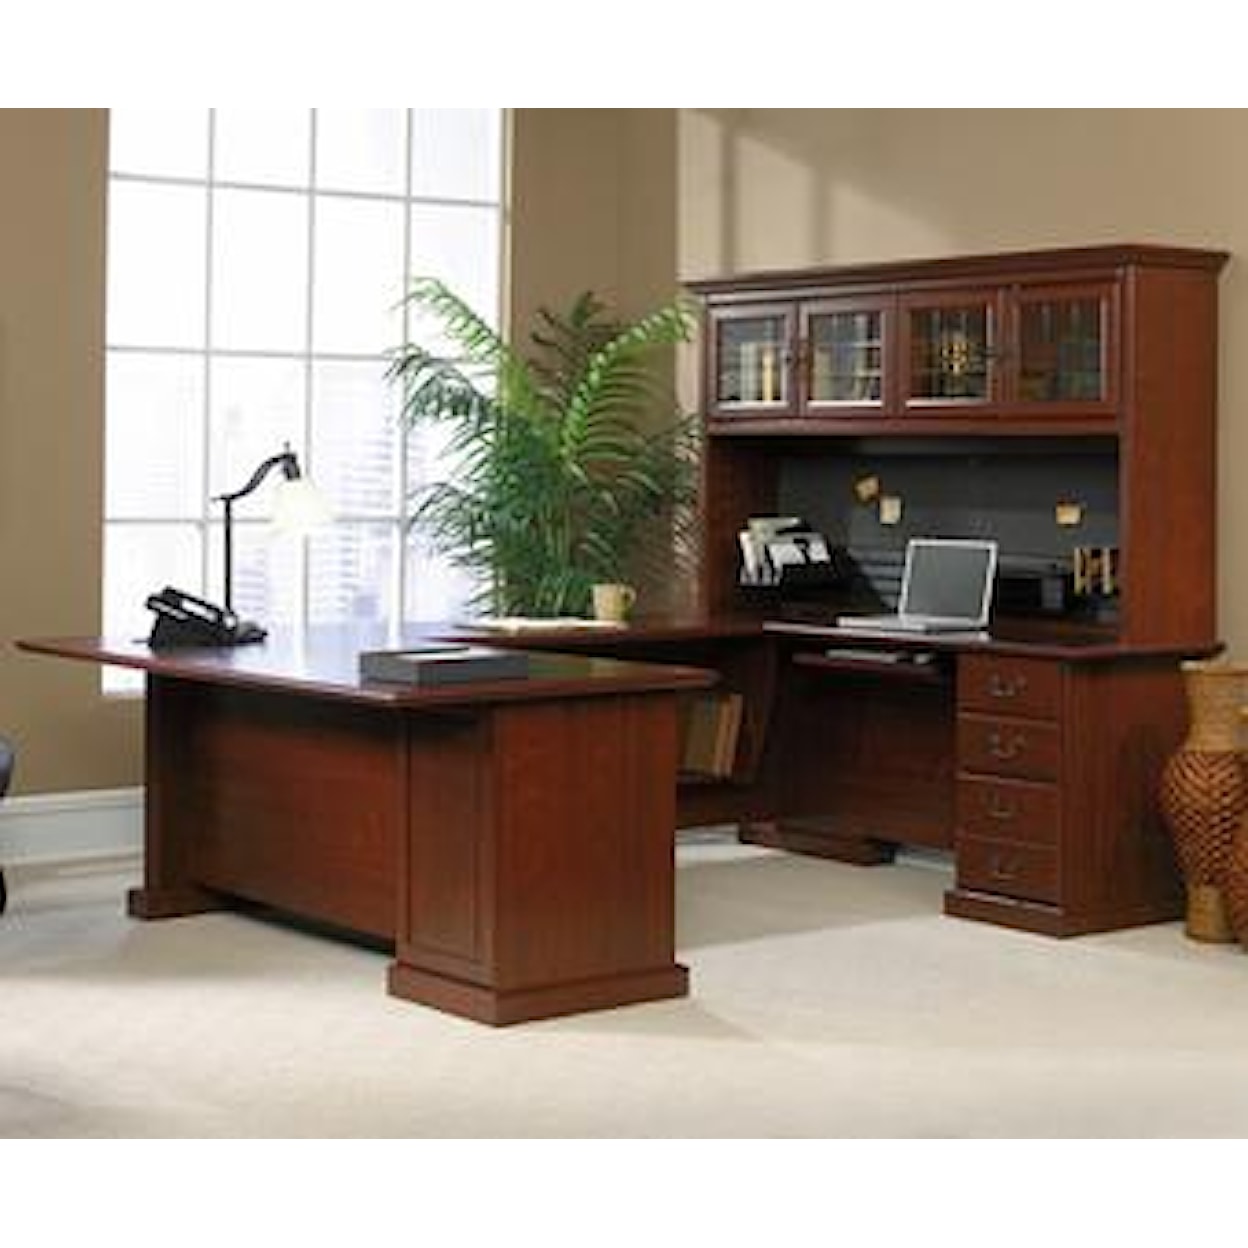 Sauder Heritage Hill Executive Office Desk